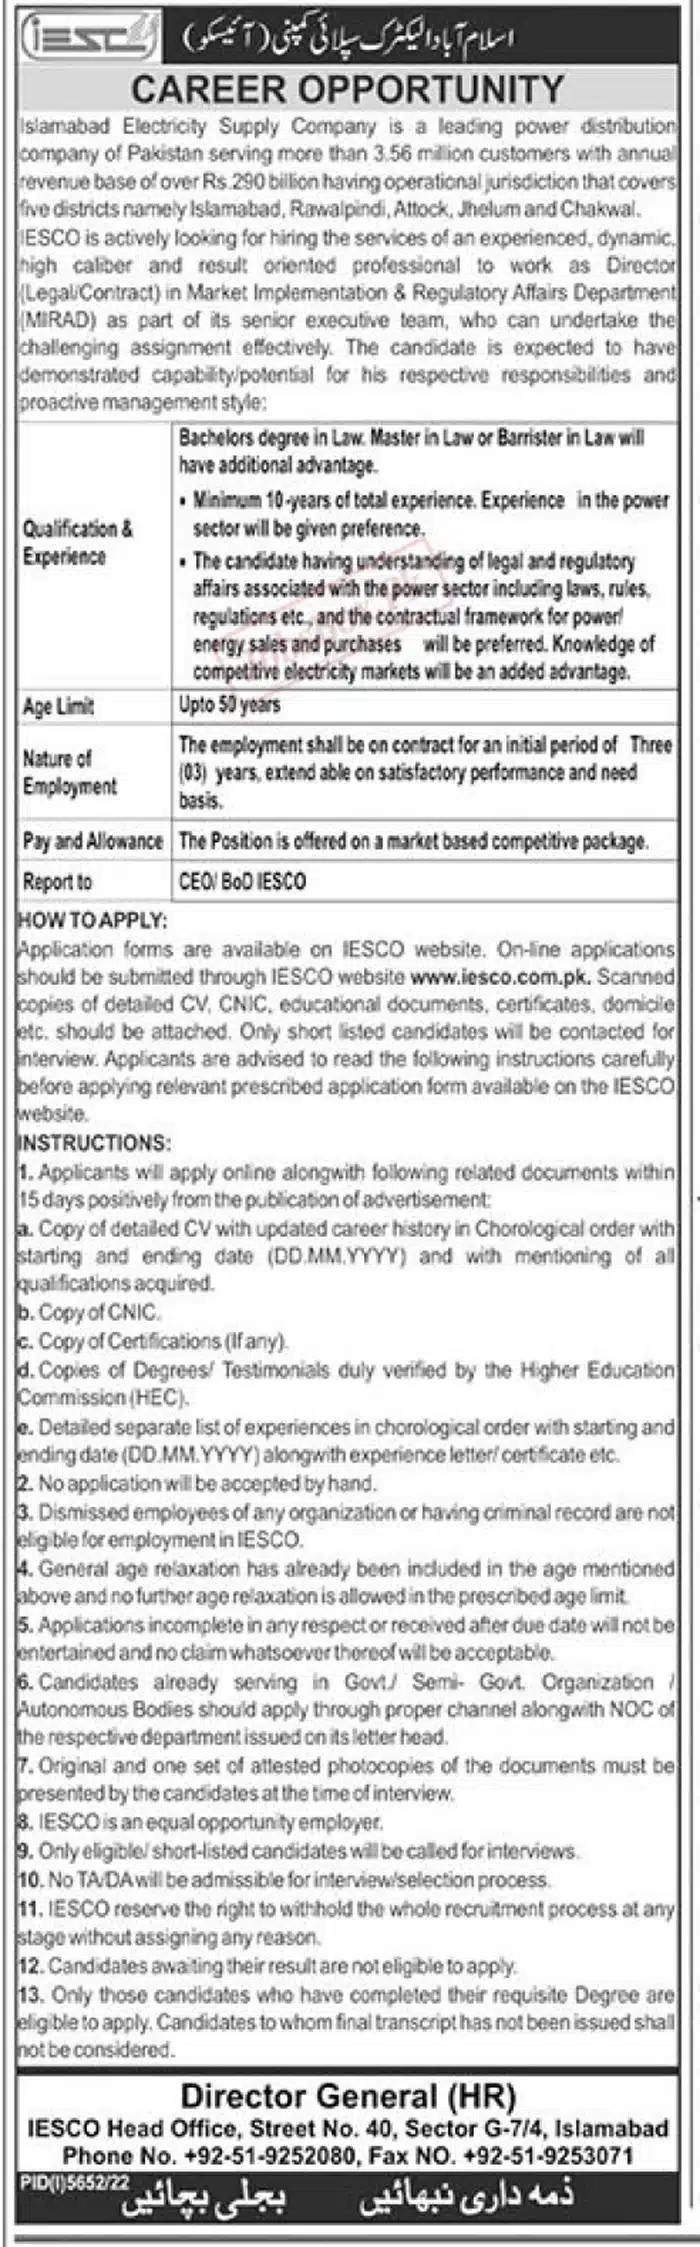 Islamabad Electric Supply Company IESCO Jobs 2023